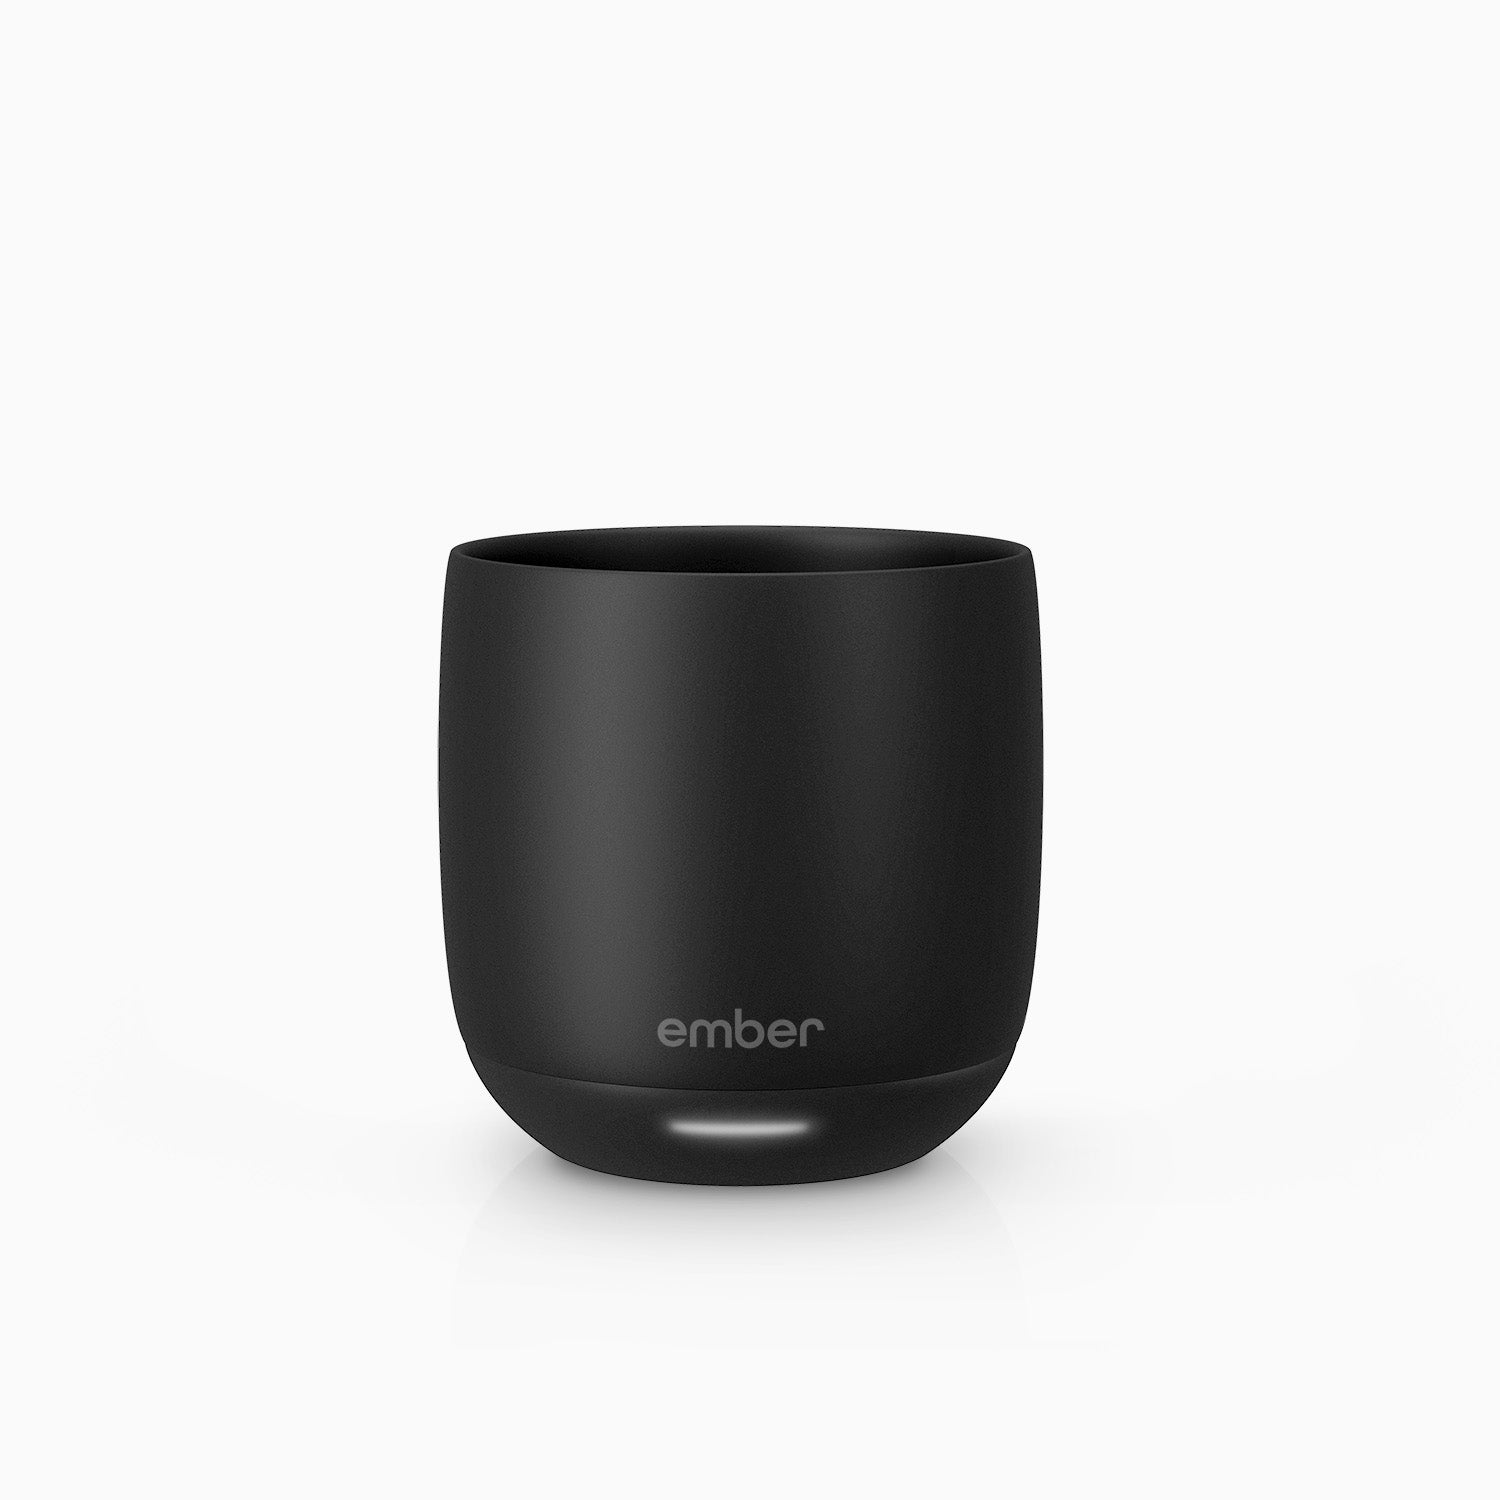 Ember - Temperature Control Smart Mug - 14 oz - Black